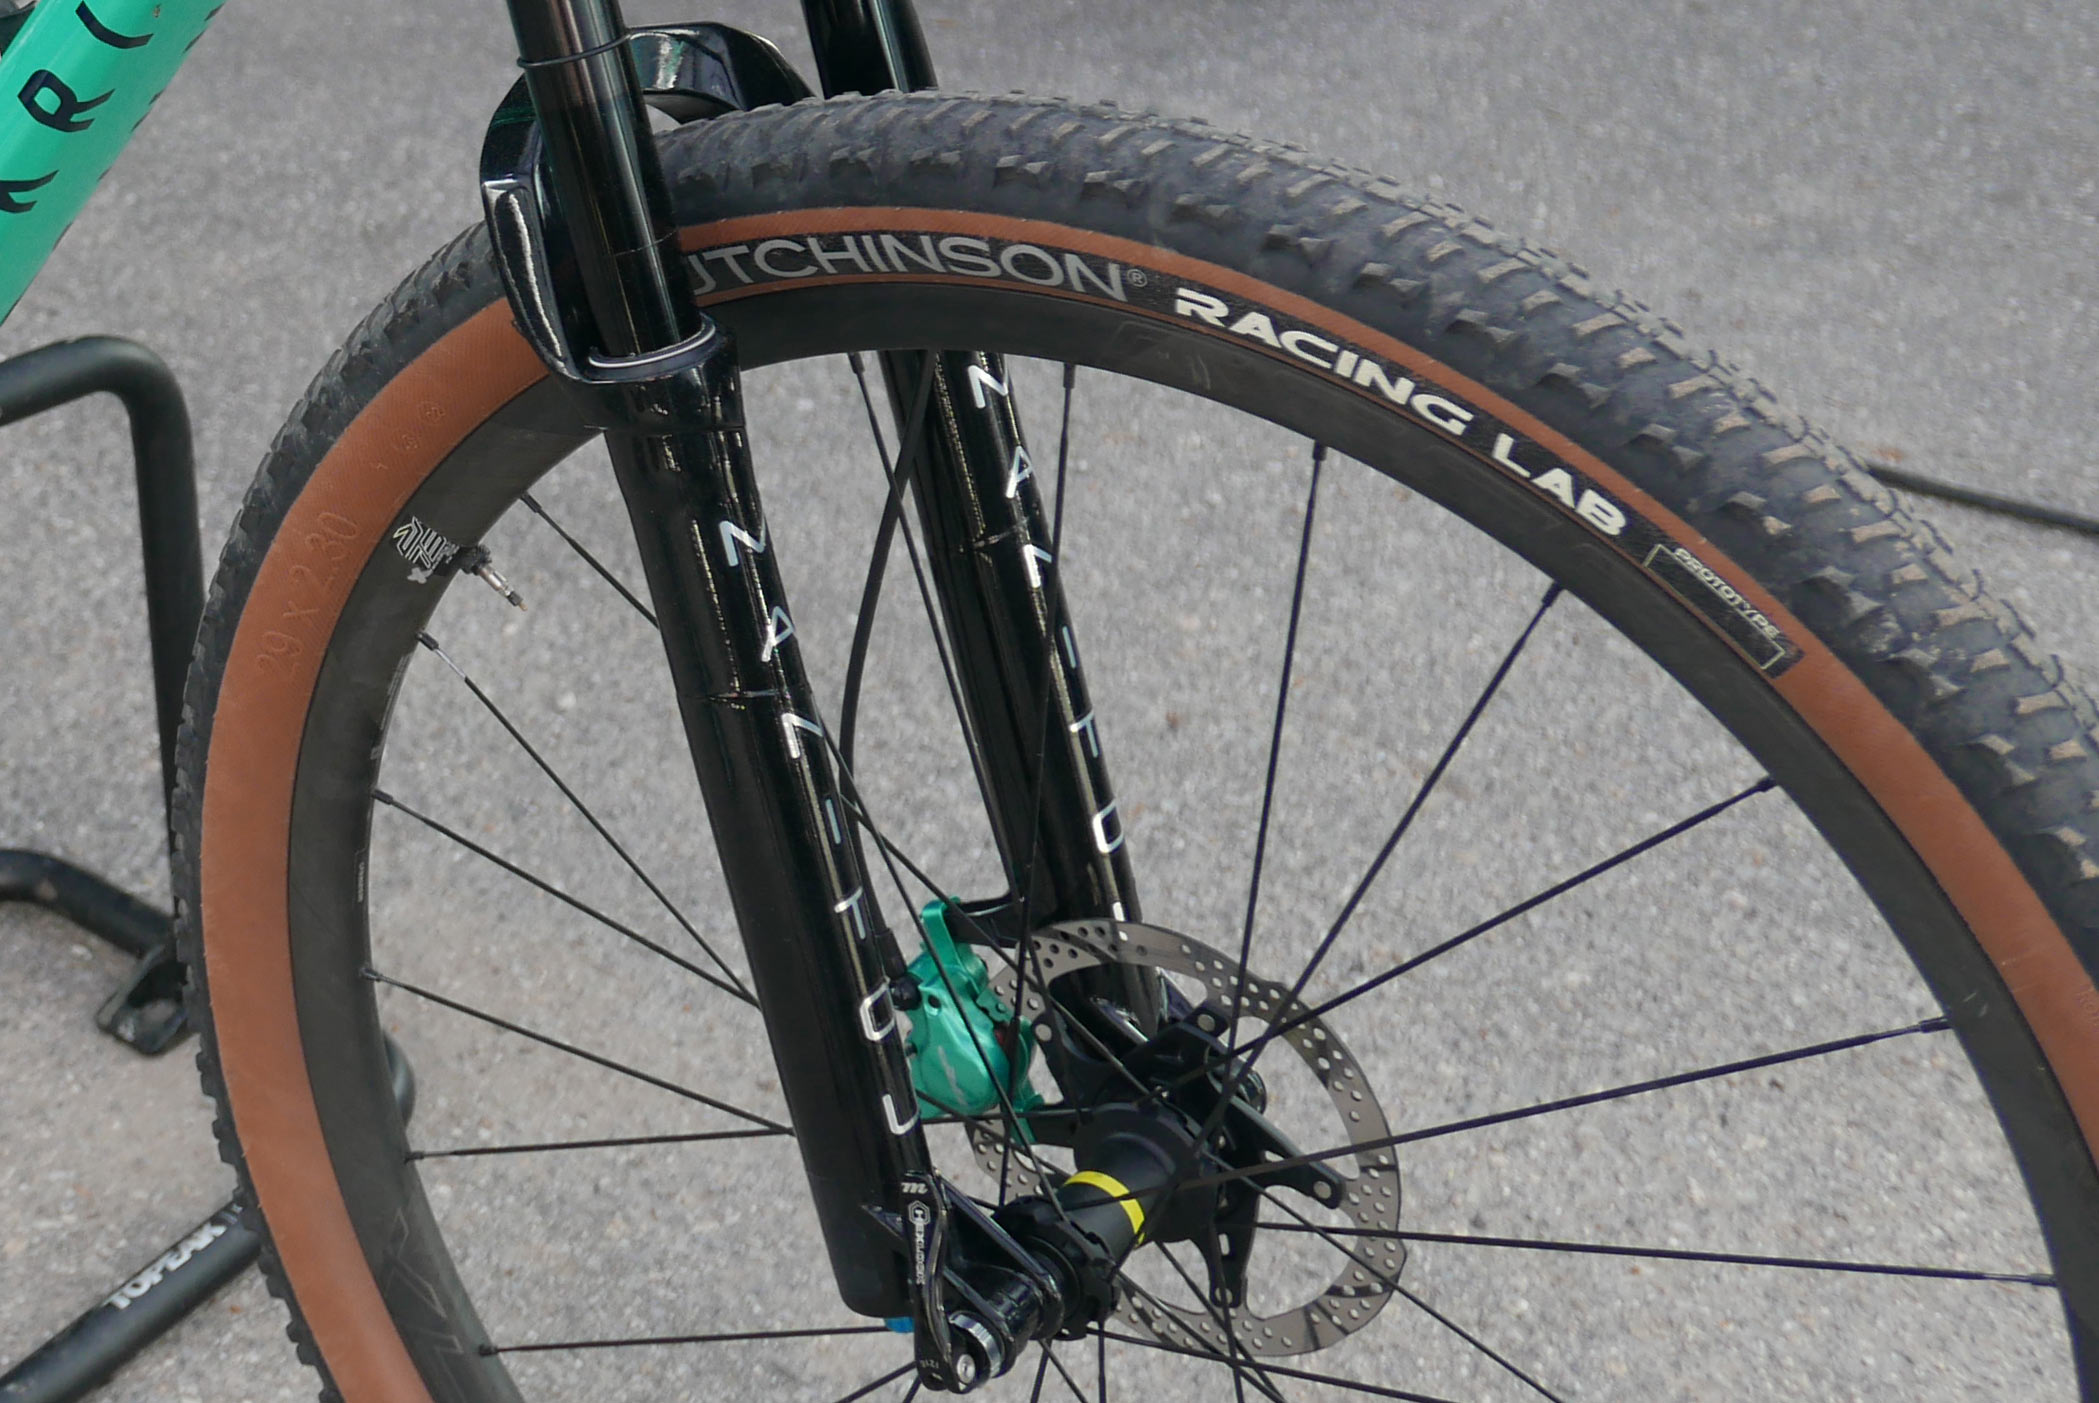 Rockrider Racing Team XC 900 hardtail mountain bike by Decathlon, prototype Hutchinson Skeleton tire